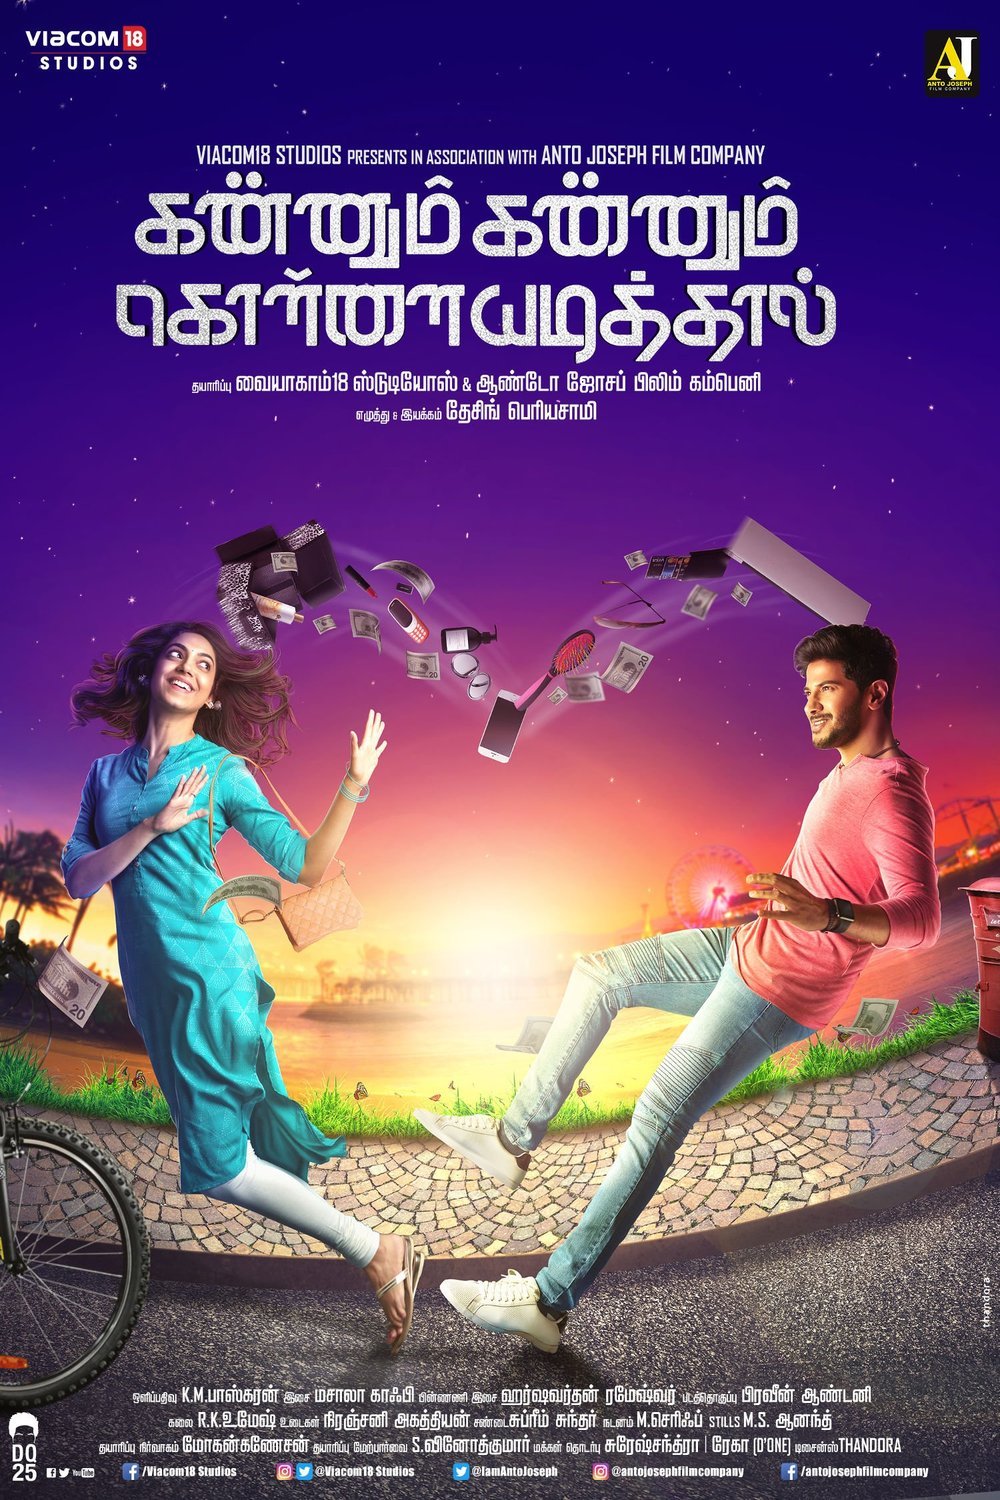 Poster of the movie Kannum Kannum Kollaiyadithaal